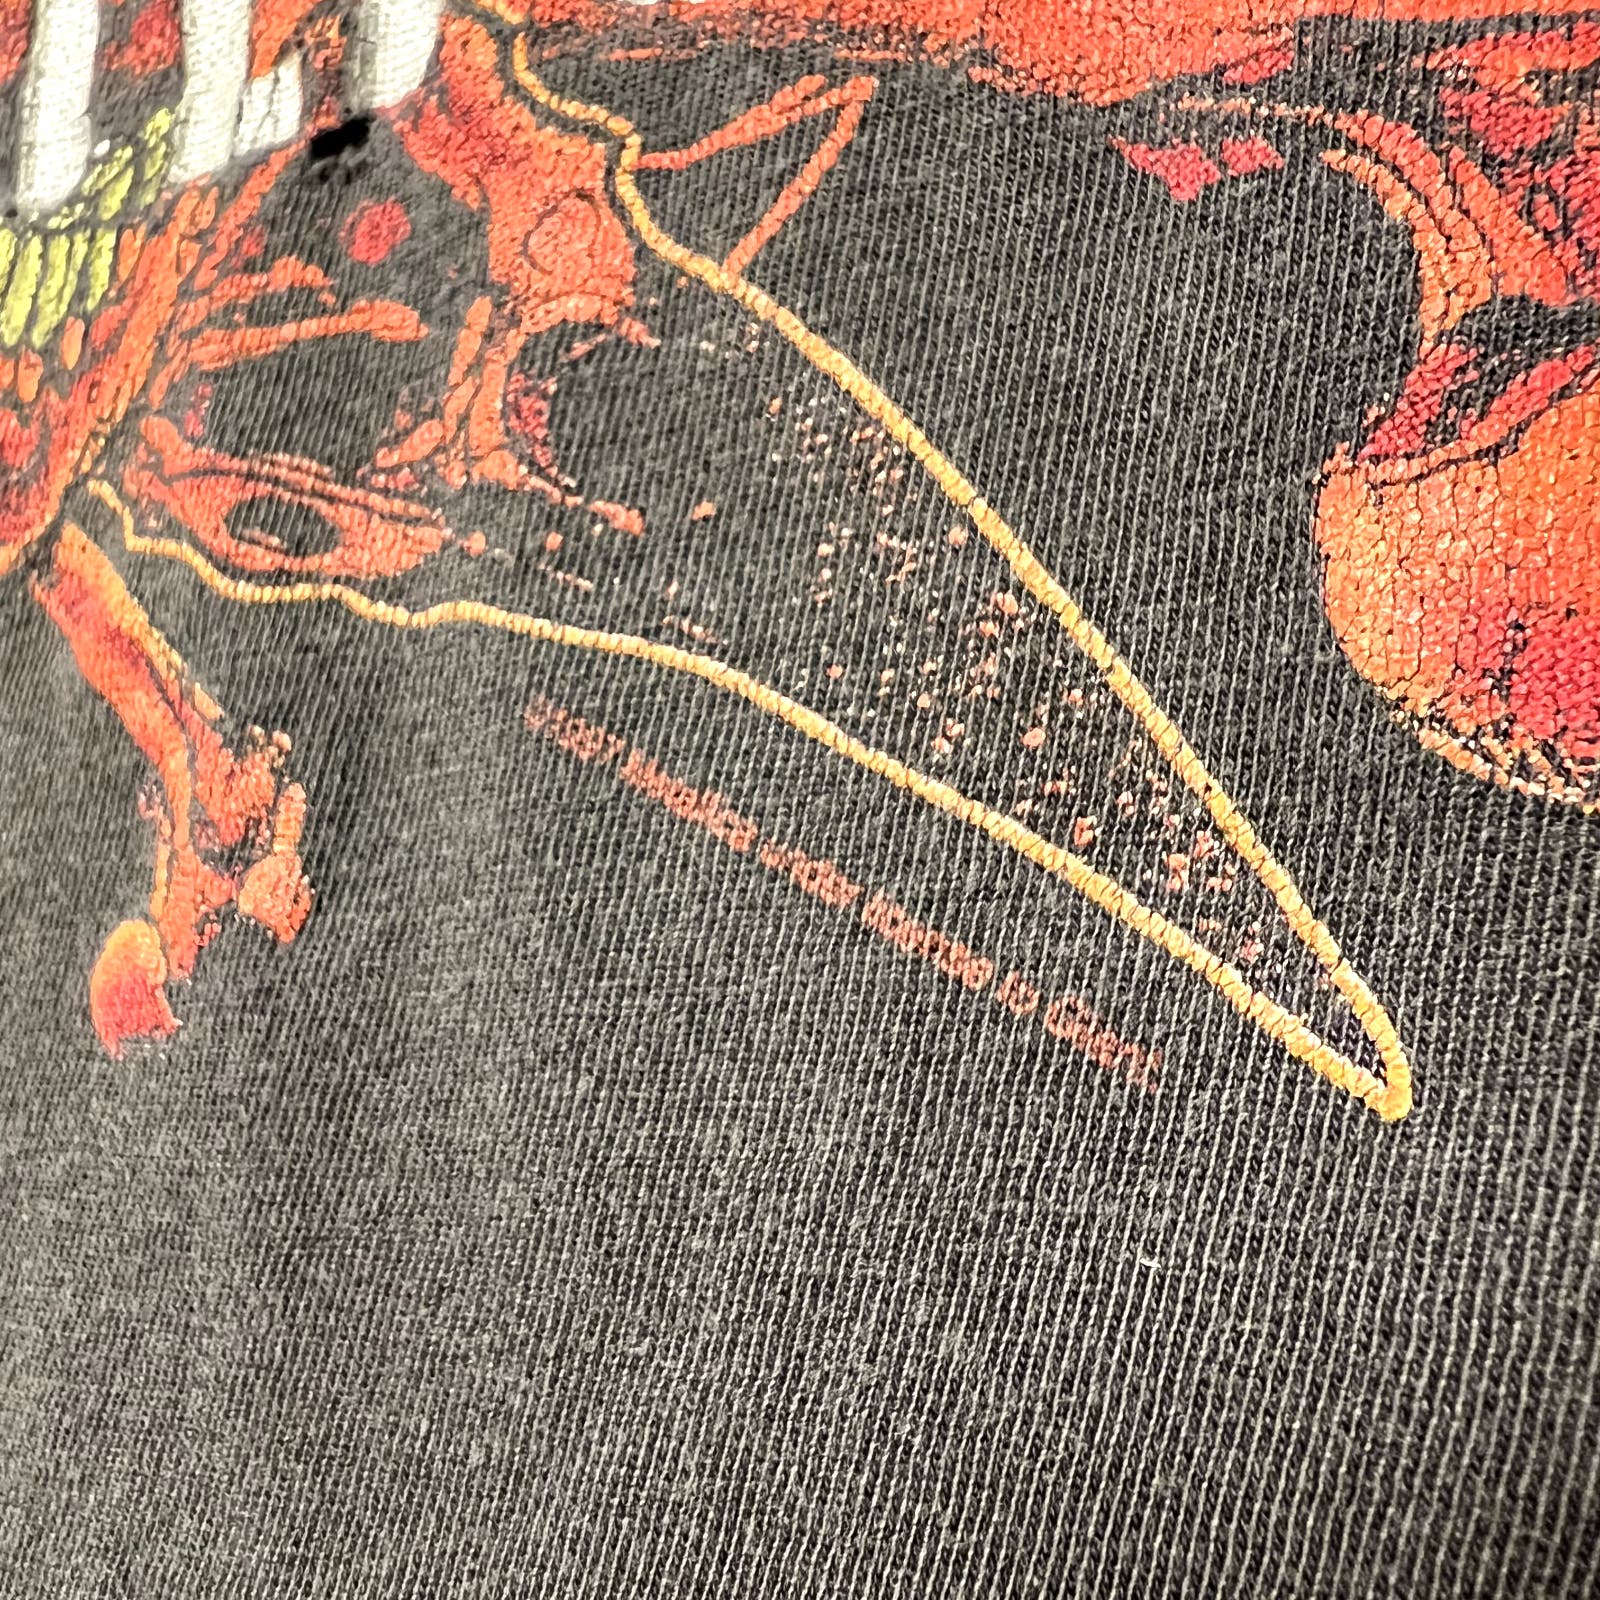 1997 Metallica Pushead Rebel Skull T-Shirt Size L